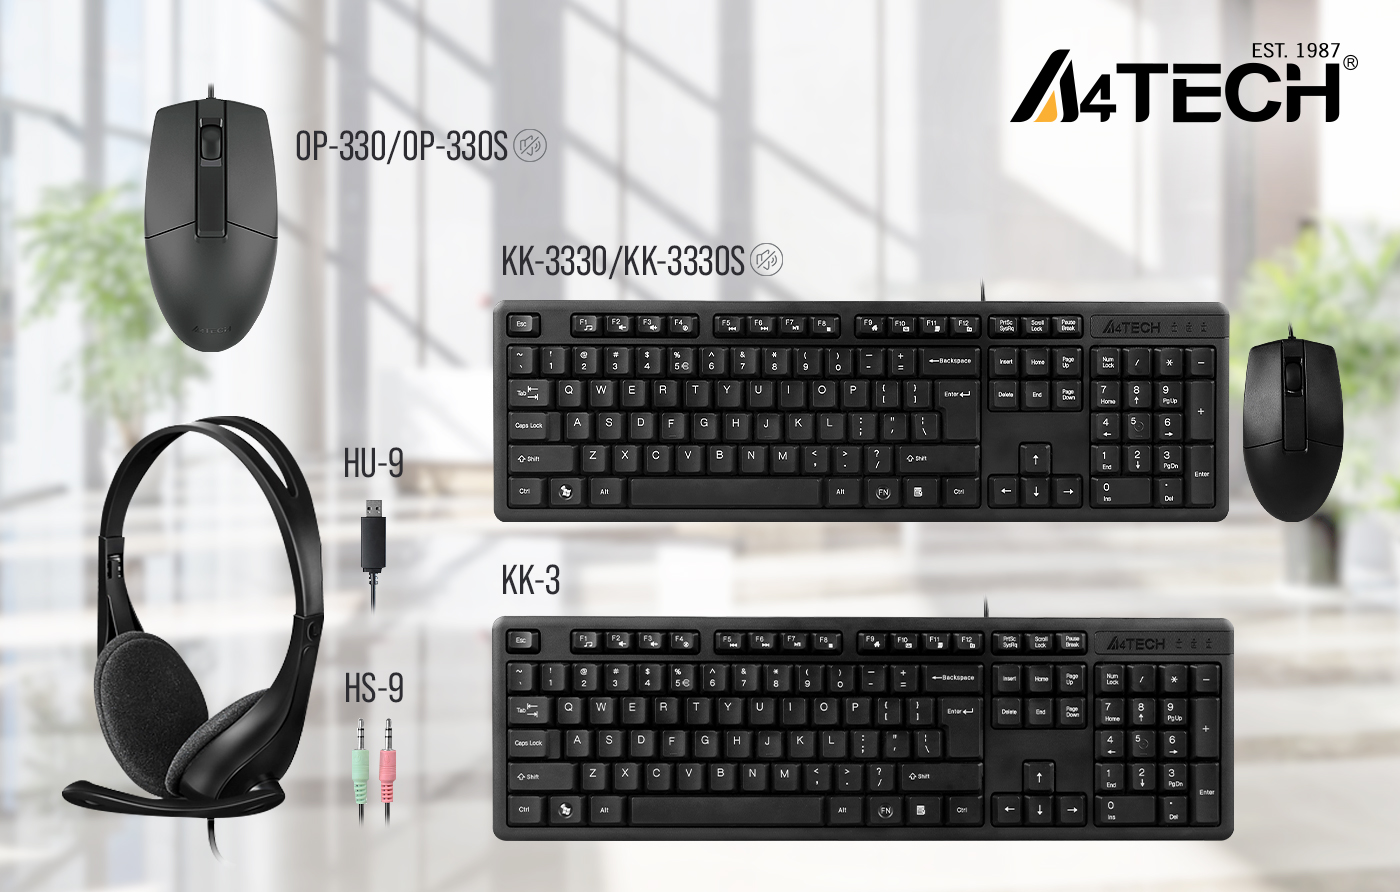 Kk 3330s. A4tech KK-3330s. Keyboard a4 Tech wired Combo KK-3+op-330. Мышь a4tech KK-3330s. A4tech KK-3330 (KK-3+op-330).